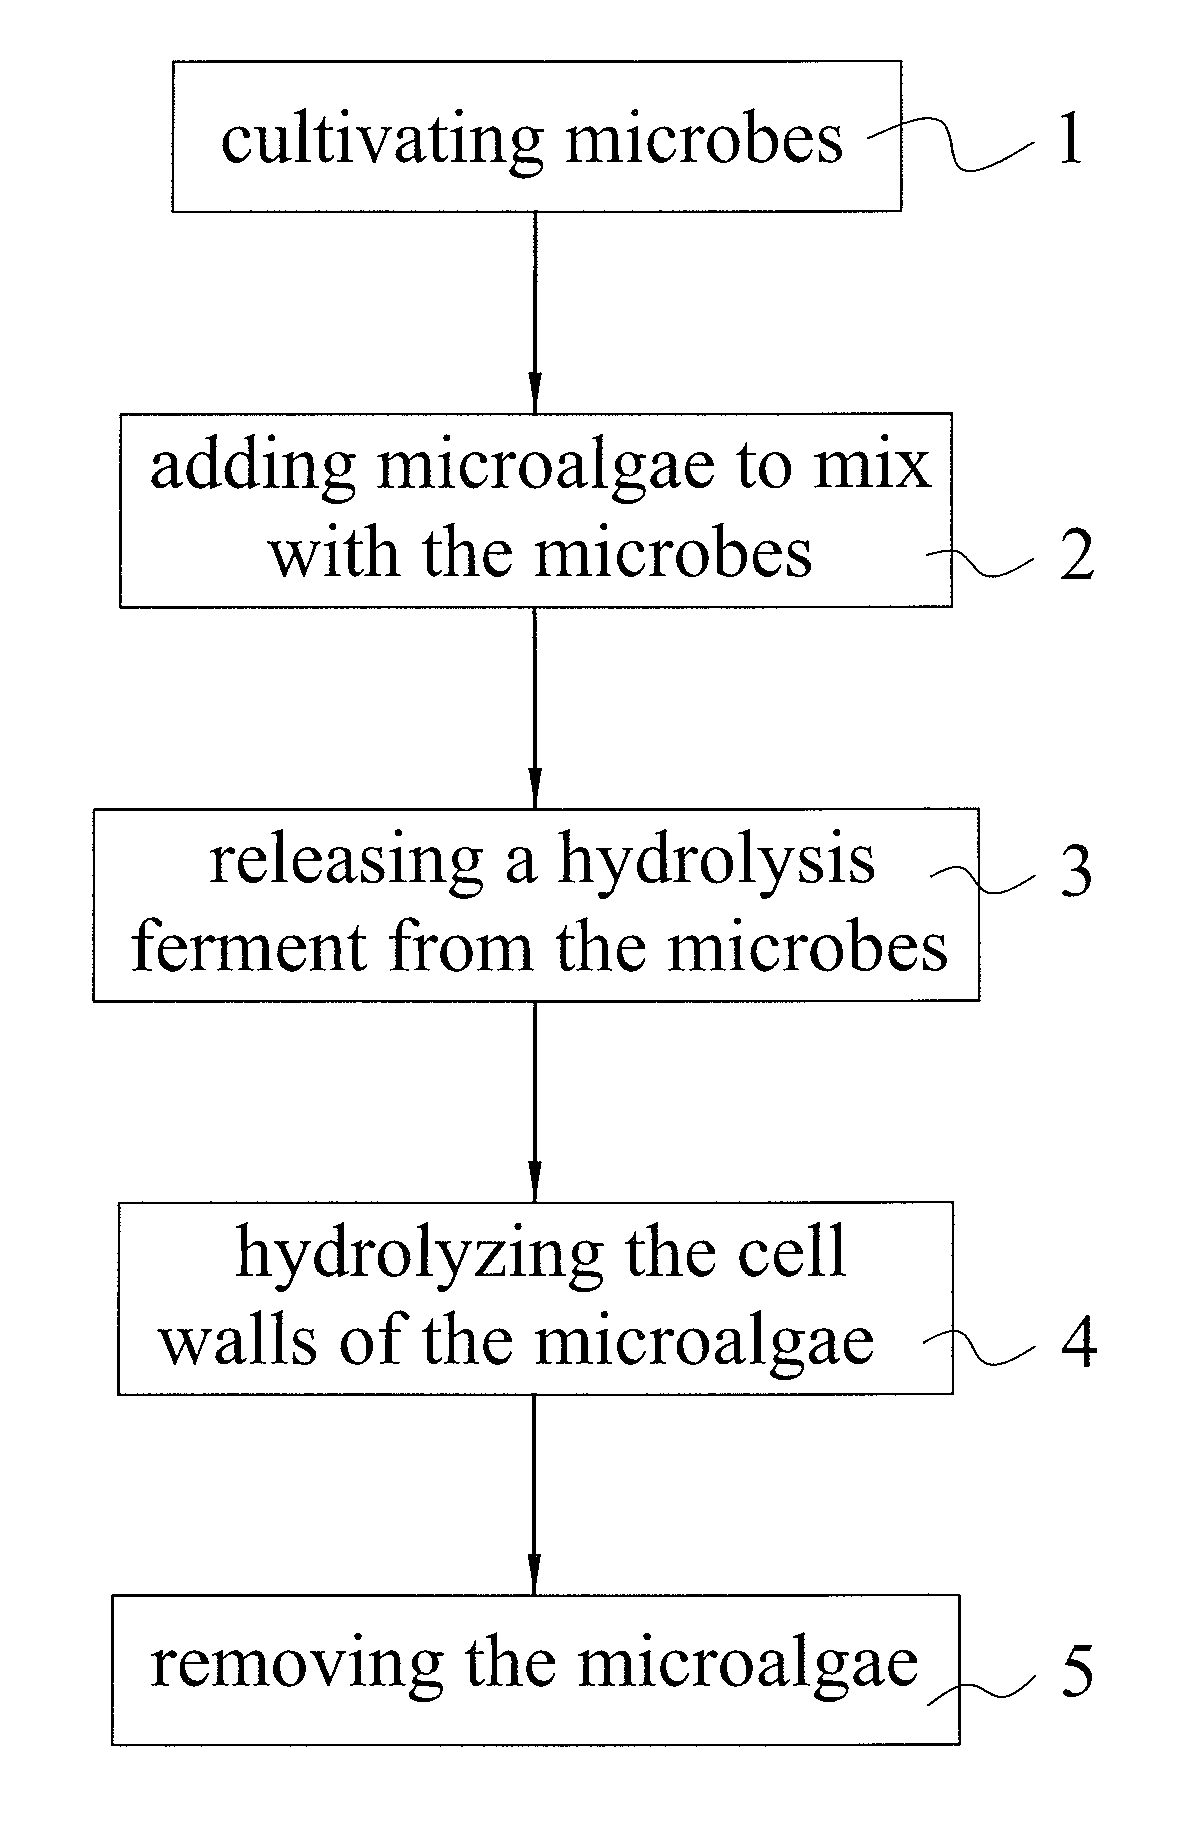 Method for breaking the cell walls of microalgae